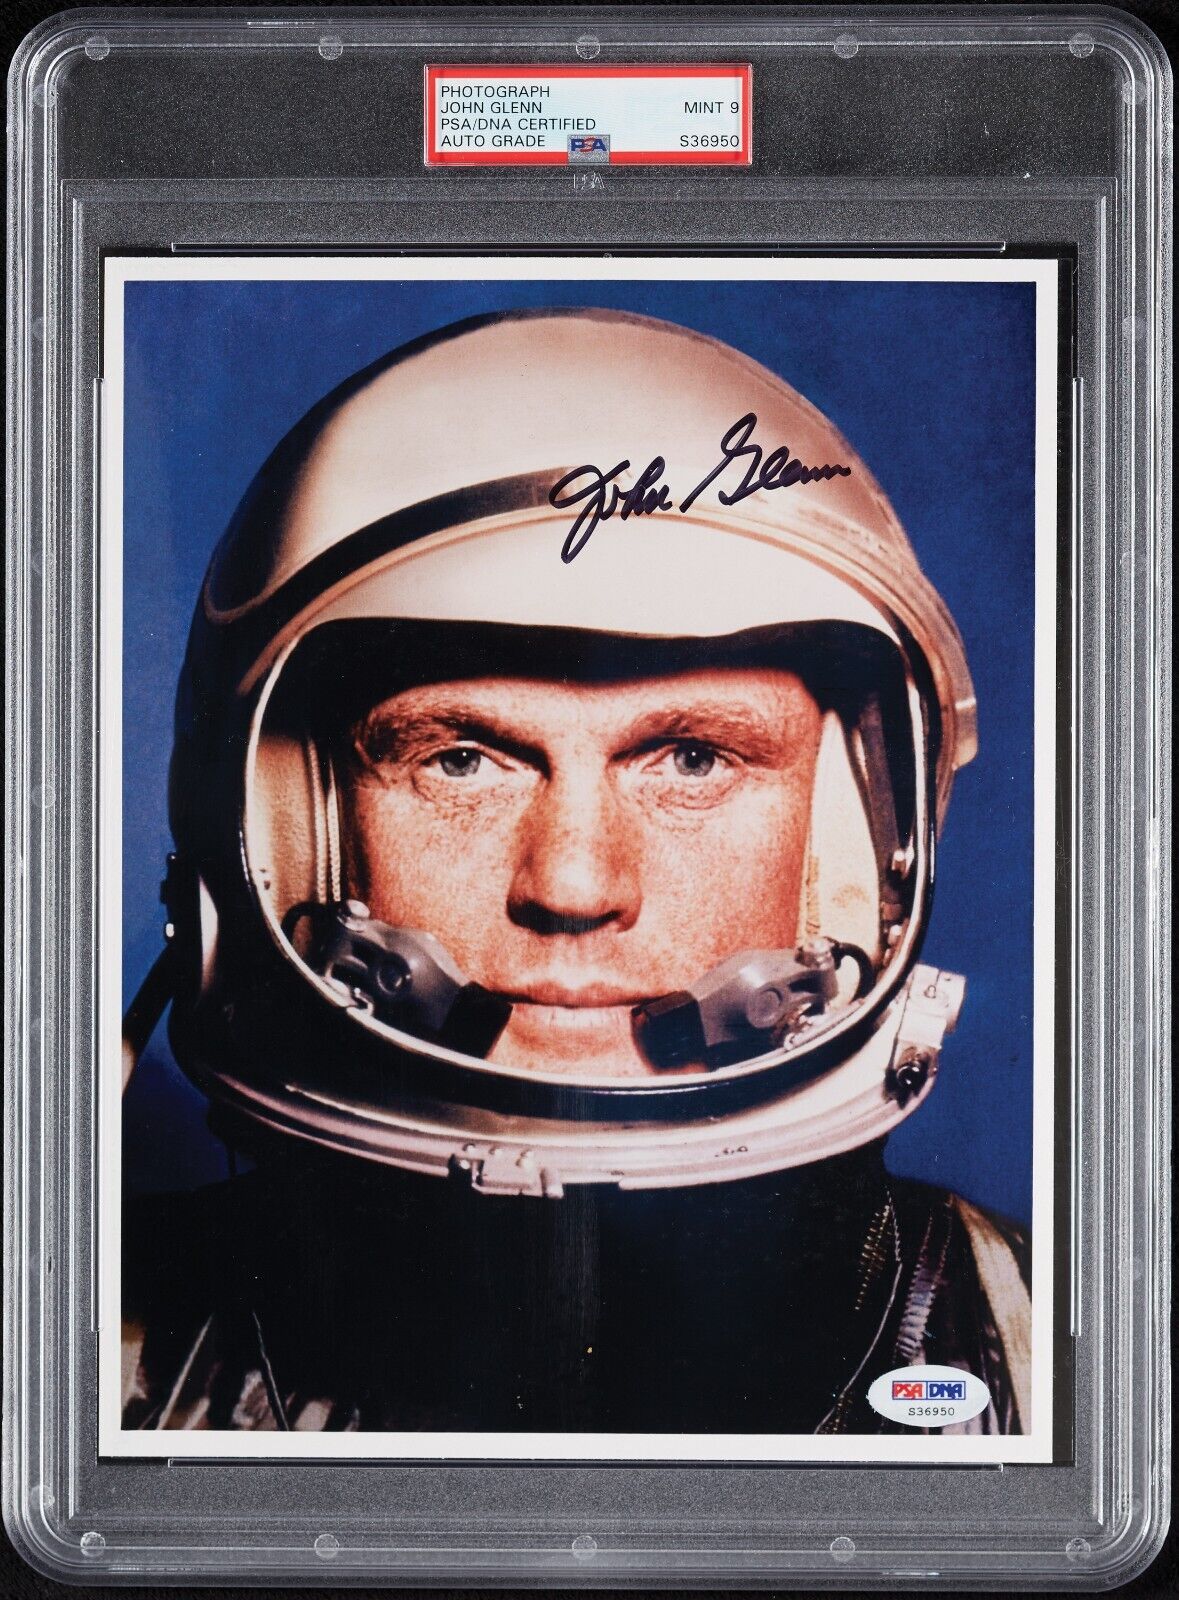 John Glenn Signed 8x10 NASA Photo PSA DNA Graded 9 MINT